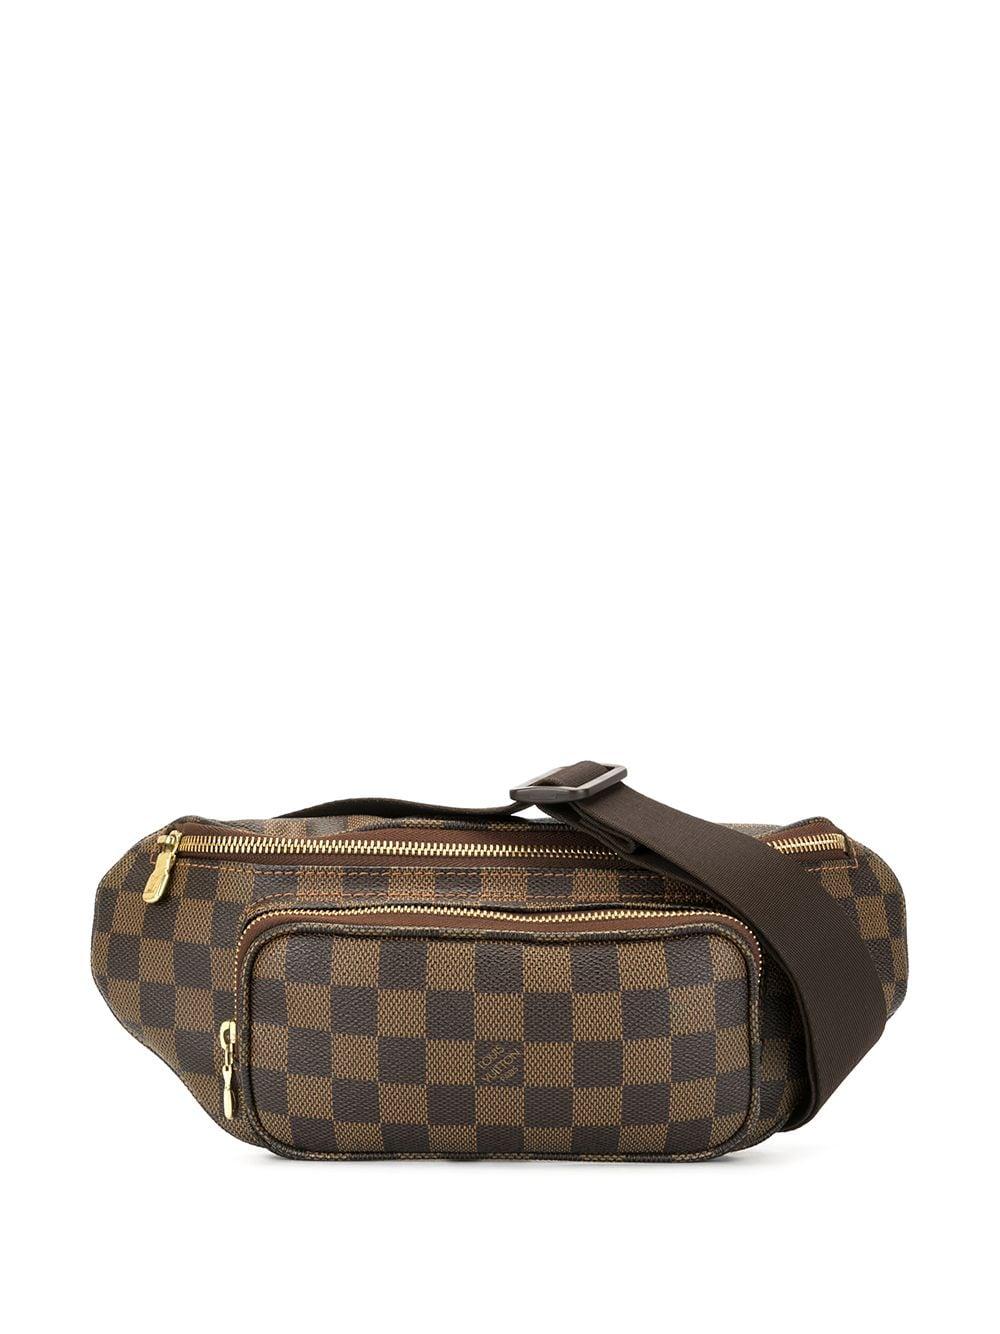 Louis Vuitton Belt Bags & Fanny Packs for Women